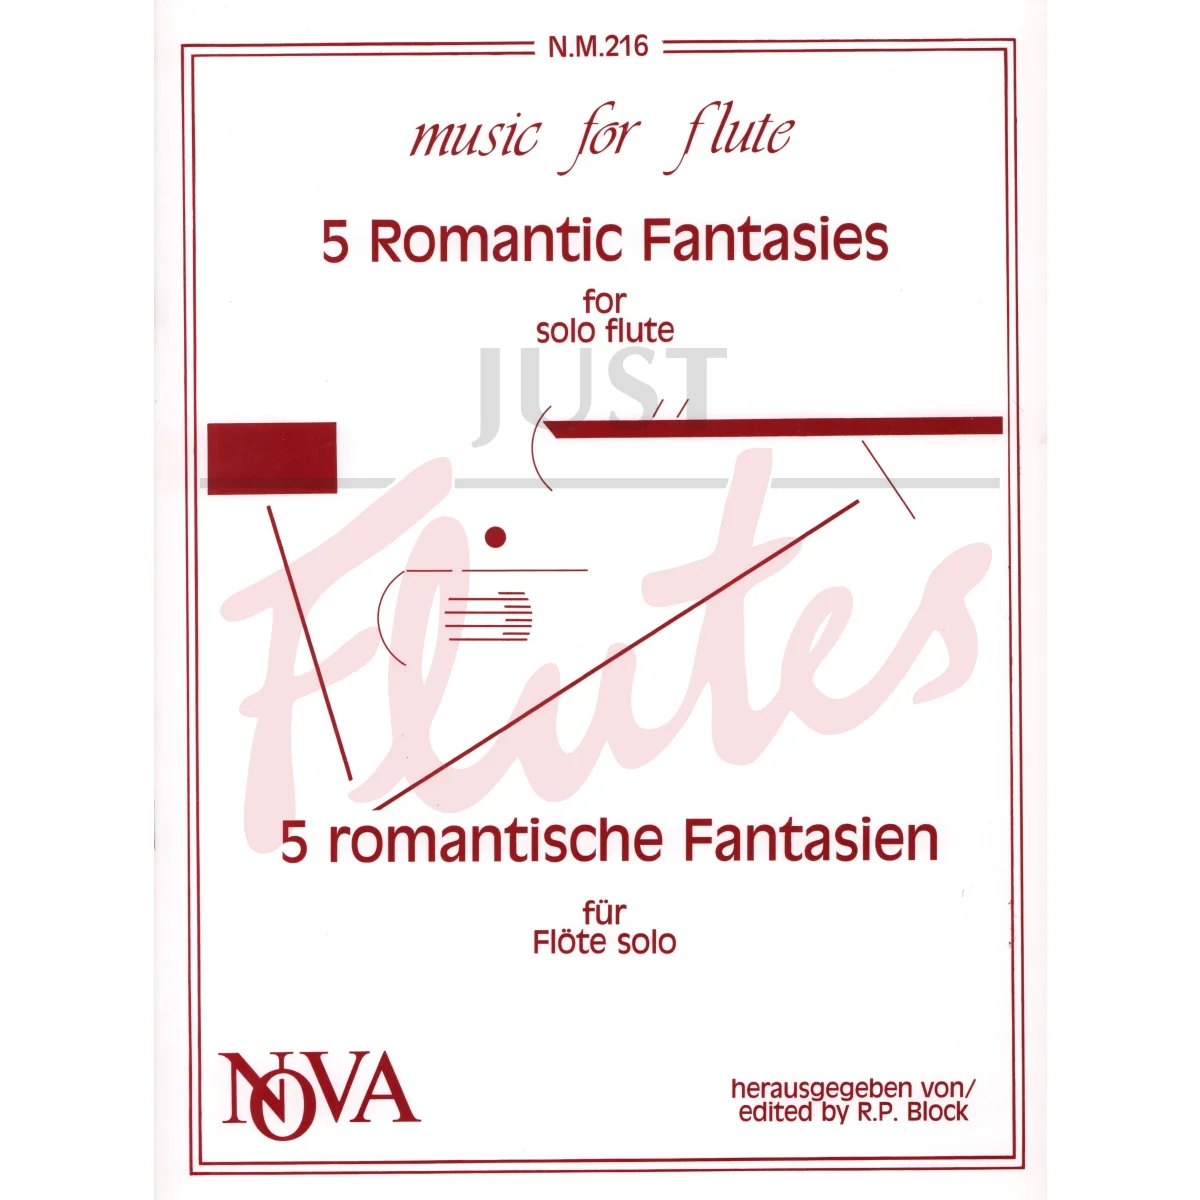 Five Romantic Fantasies for Solo Flute